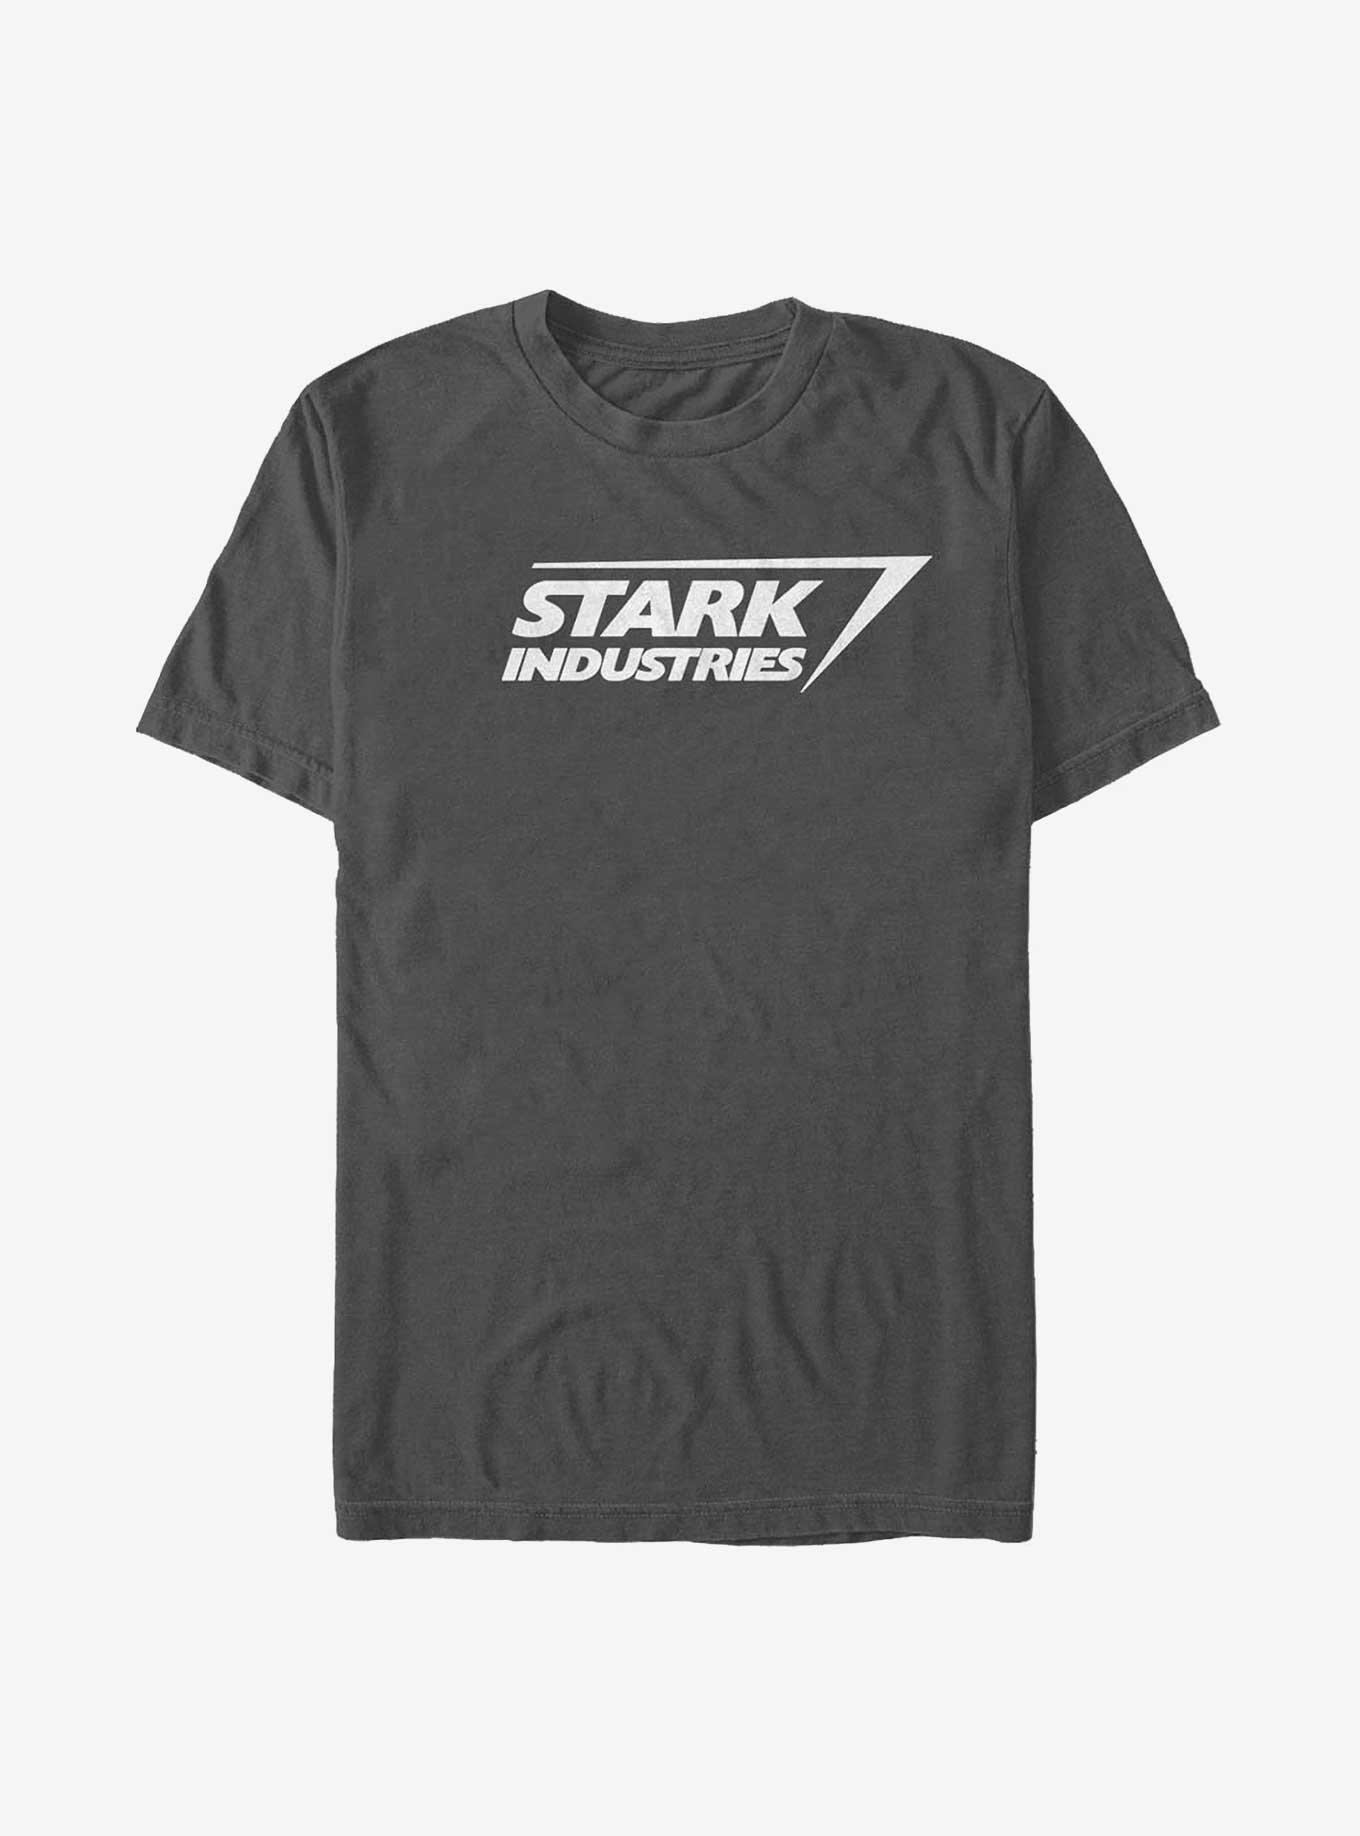 Marvel Iron Man Stark Industries T-Shirt, CHARCOAL, hi-res